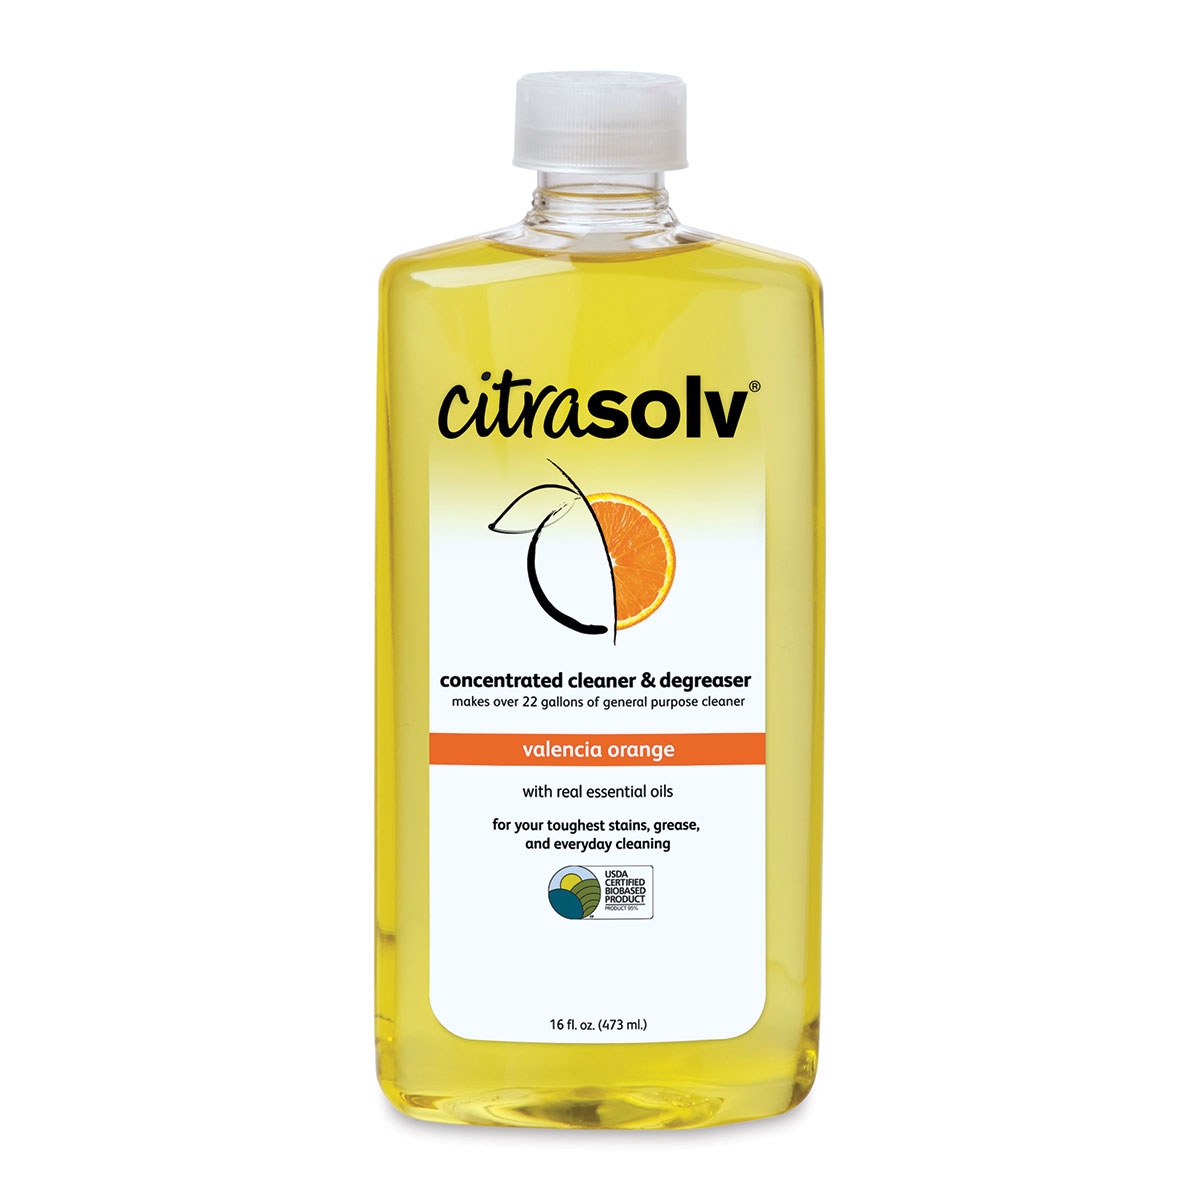 CitraSolv Natural Cleaner & Degreaser, Valencia Orange, with Real Essential Oils - 32 fl oz